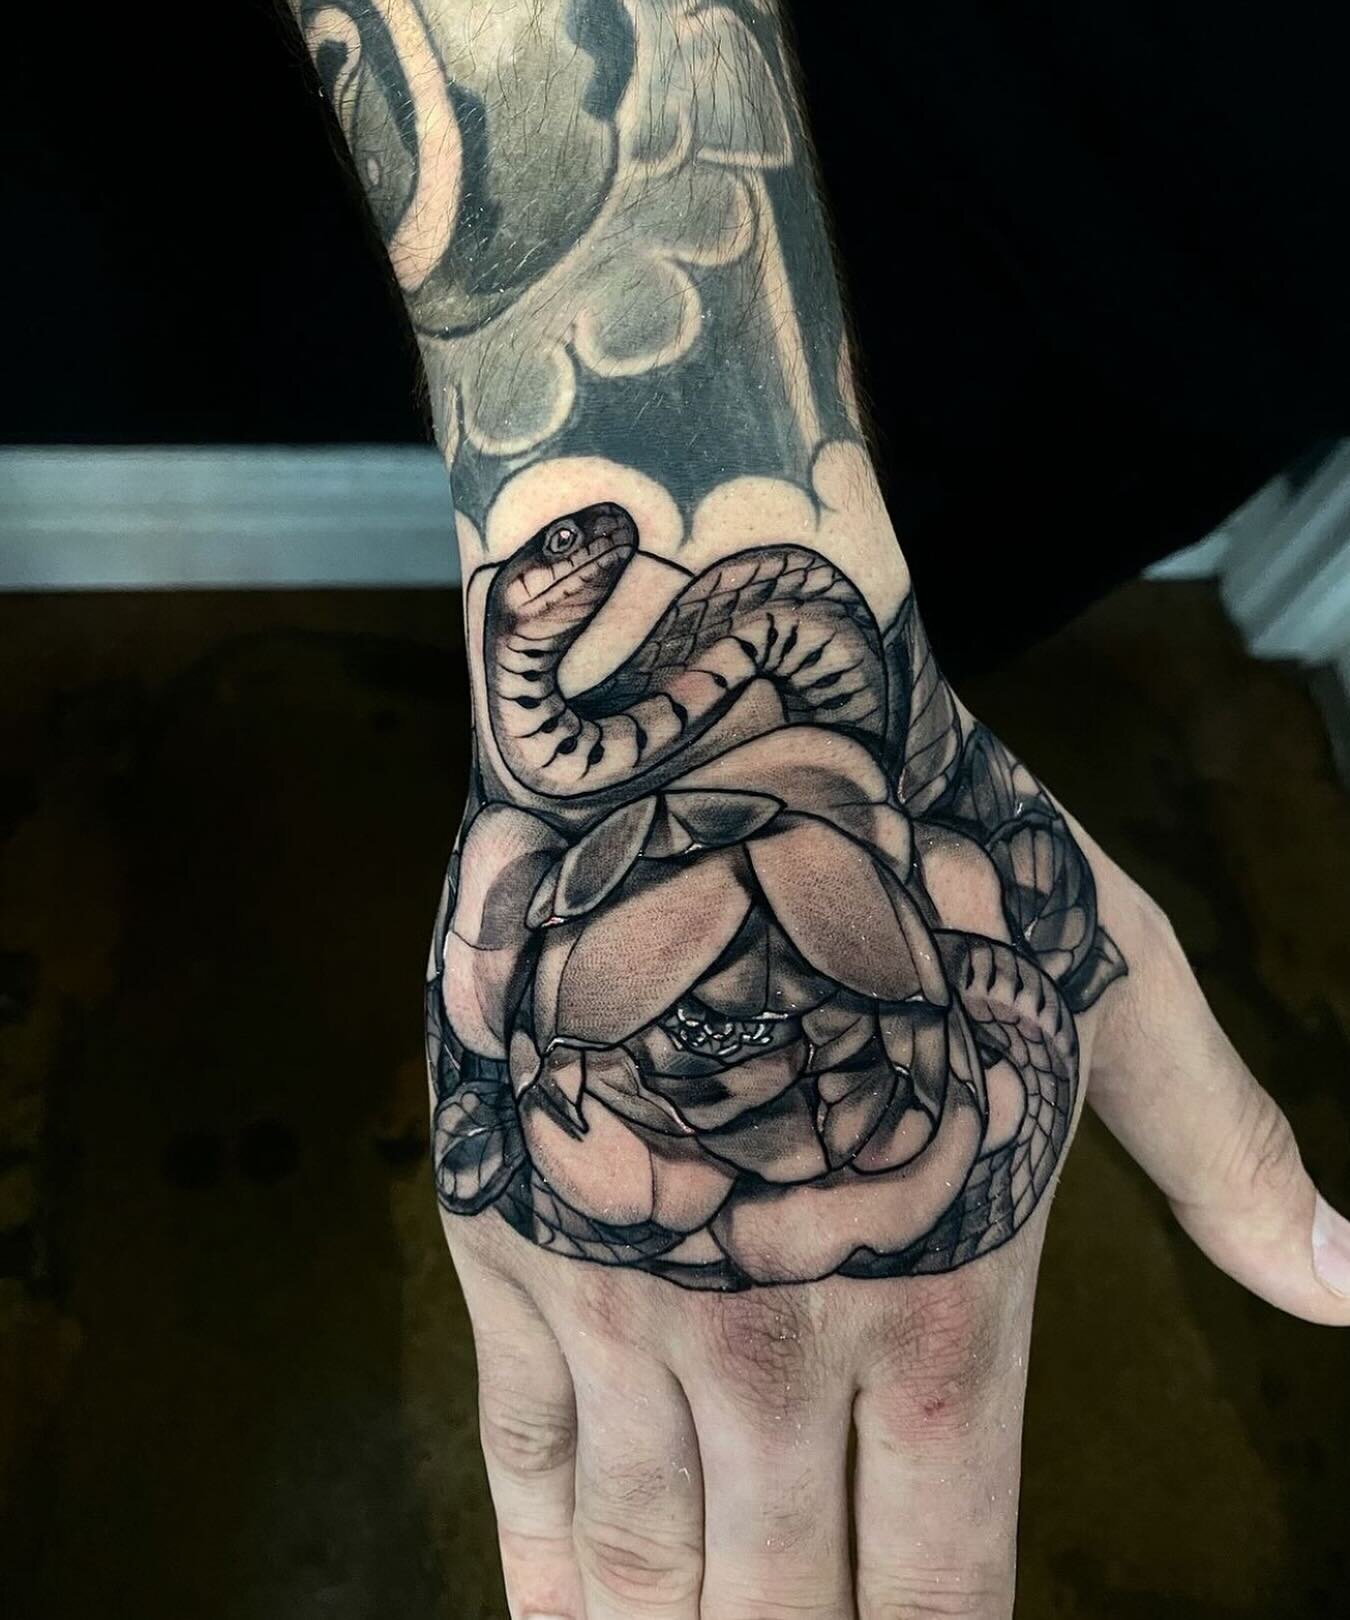 Done by @frankxtattoos 

#handtattoo #snaketattoo #blackandgreytattoo #tattooartist